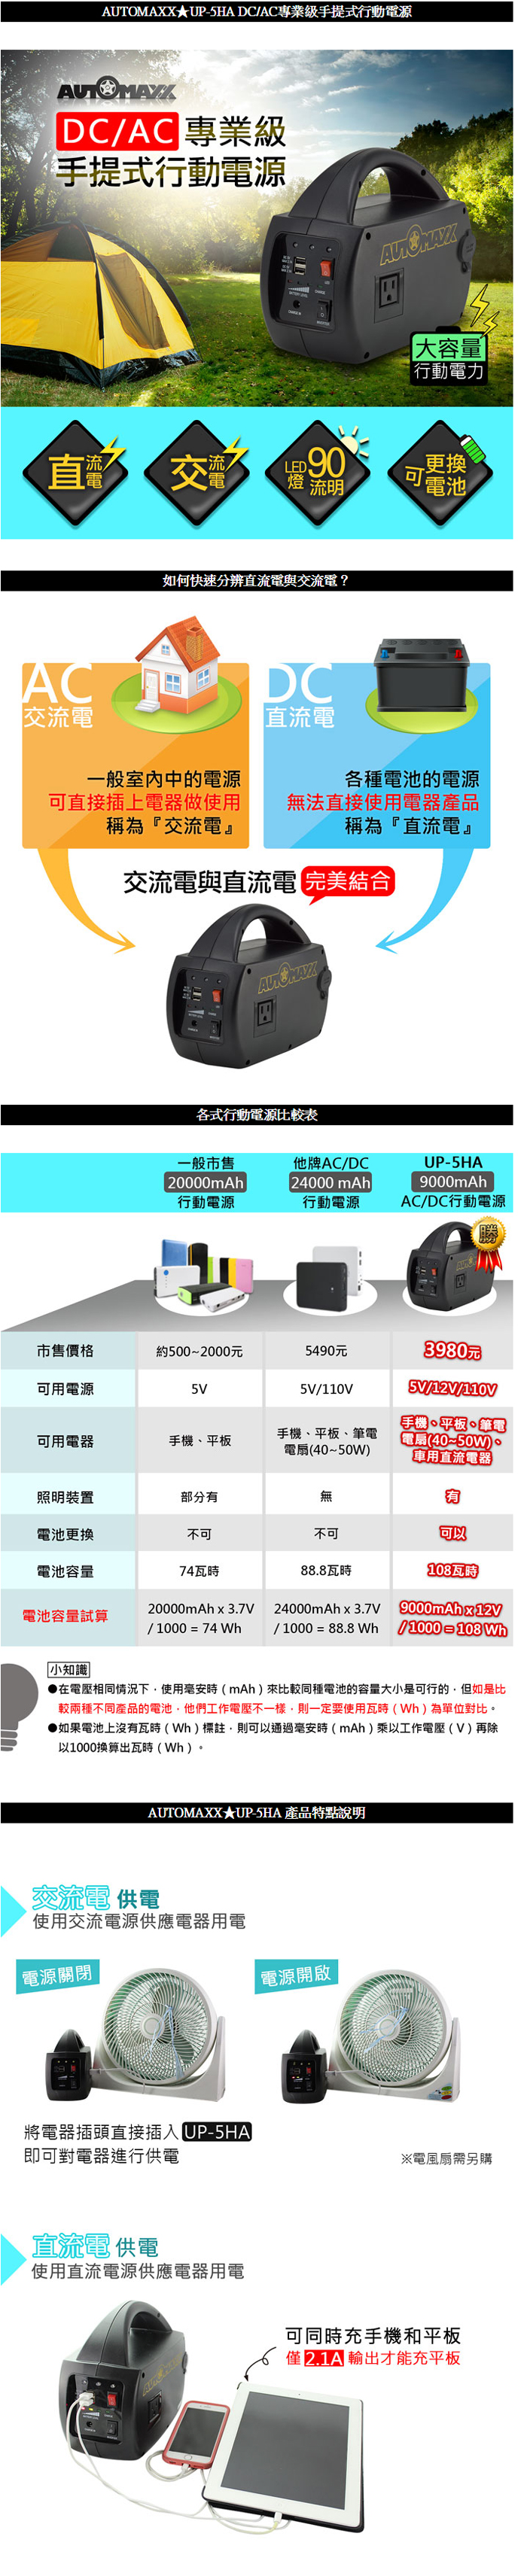 AUTOMAXX DC/AC專業級手提式行動電源+電池補充包 UP-5HA+5HB